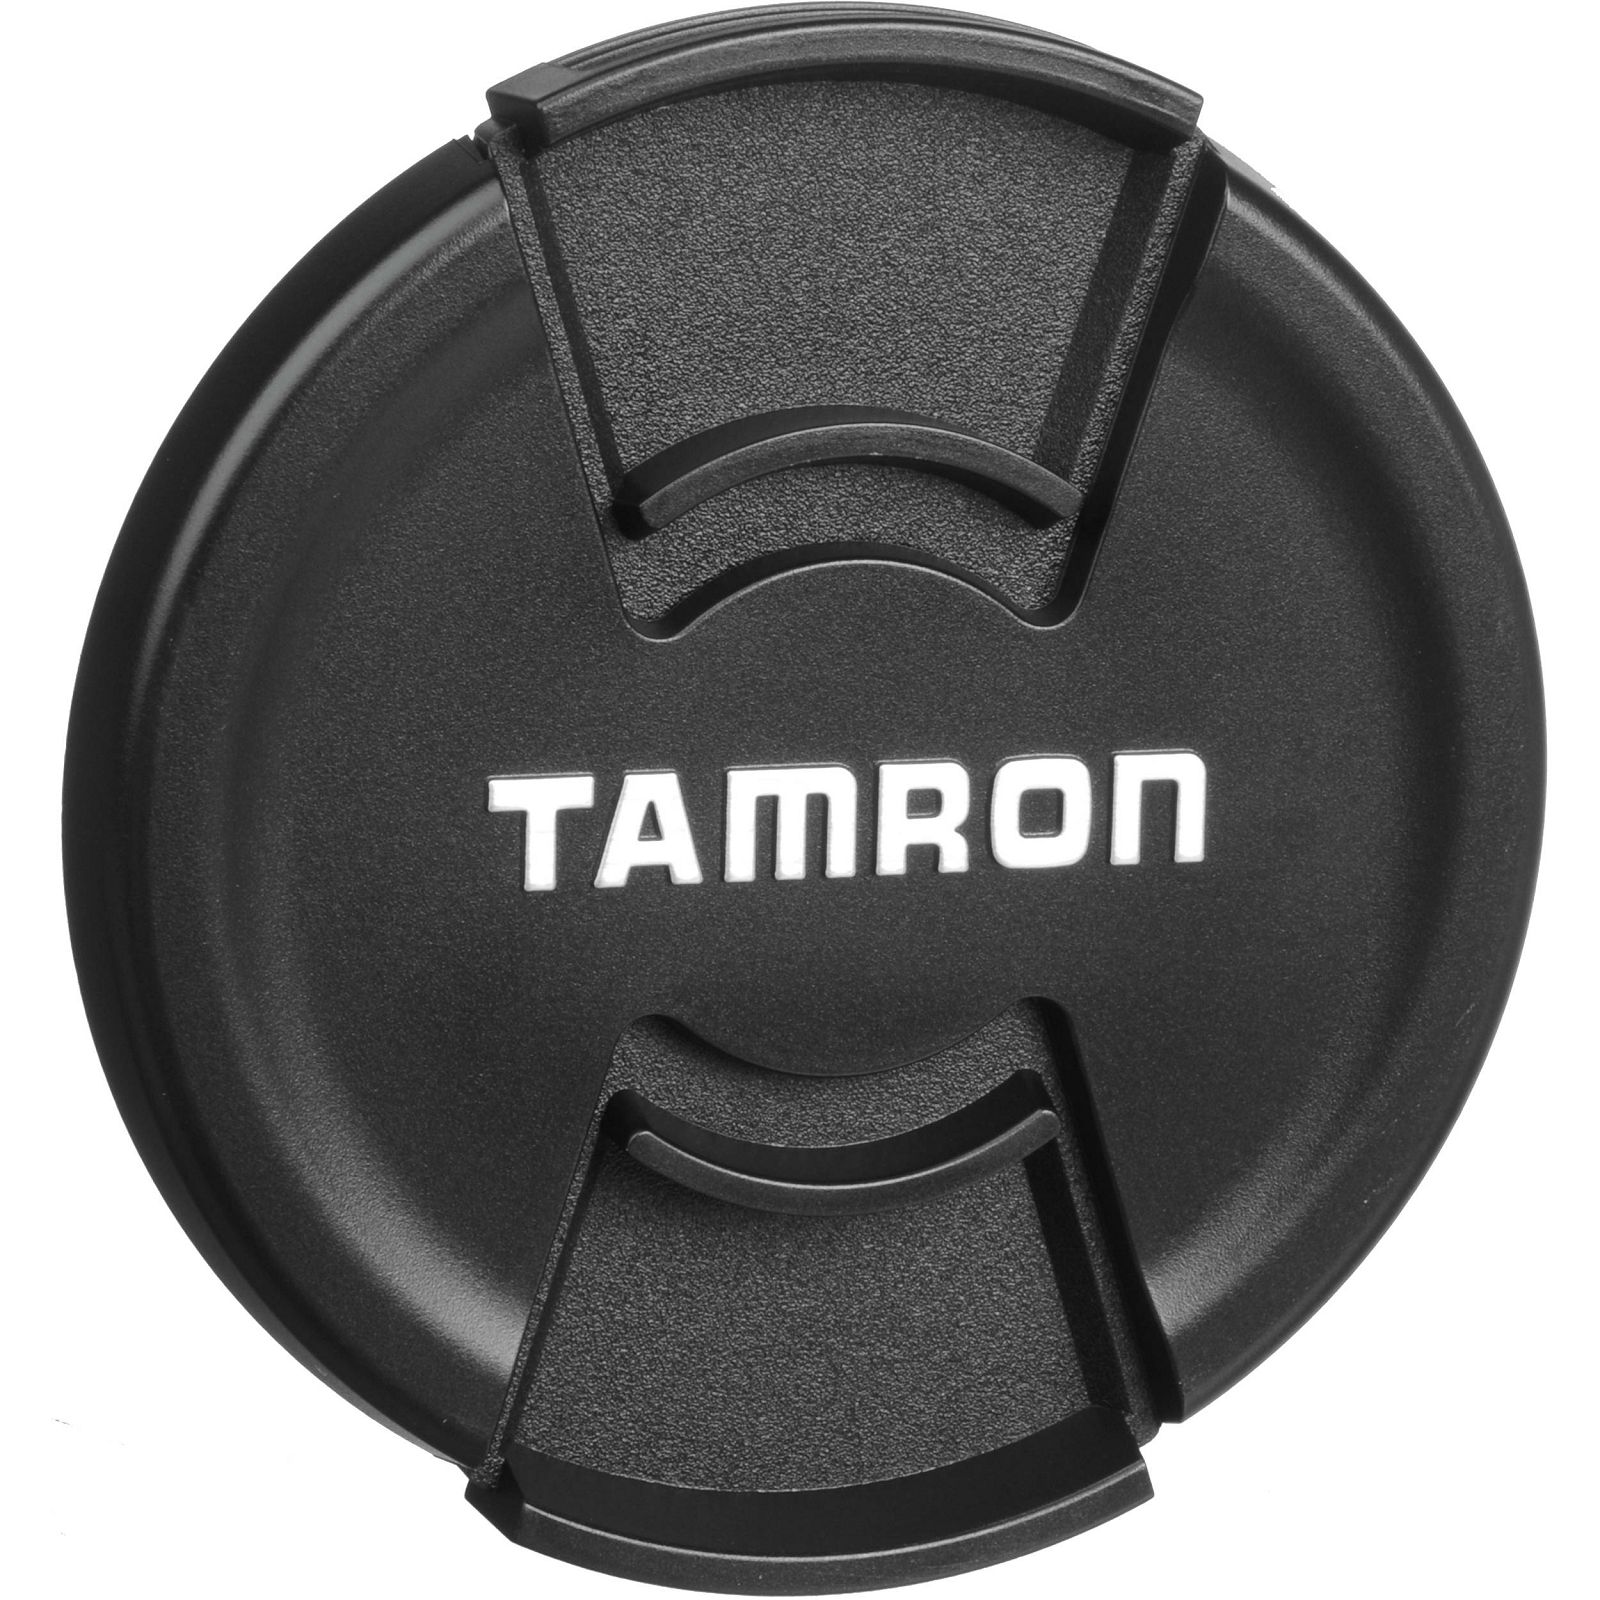 Tamron AF SP 17-50mm f/2.8 XR Di II LD Aspherical [IF] objektiv za Nikon DX with built-in motor (A16NII)